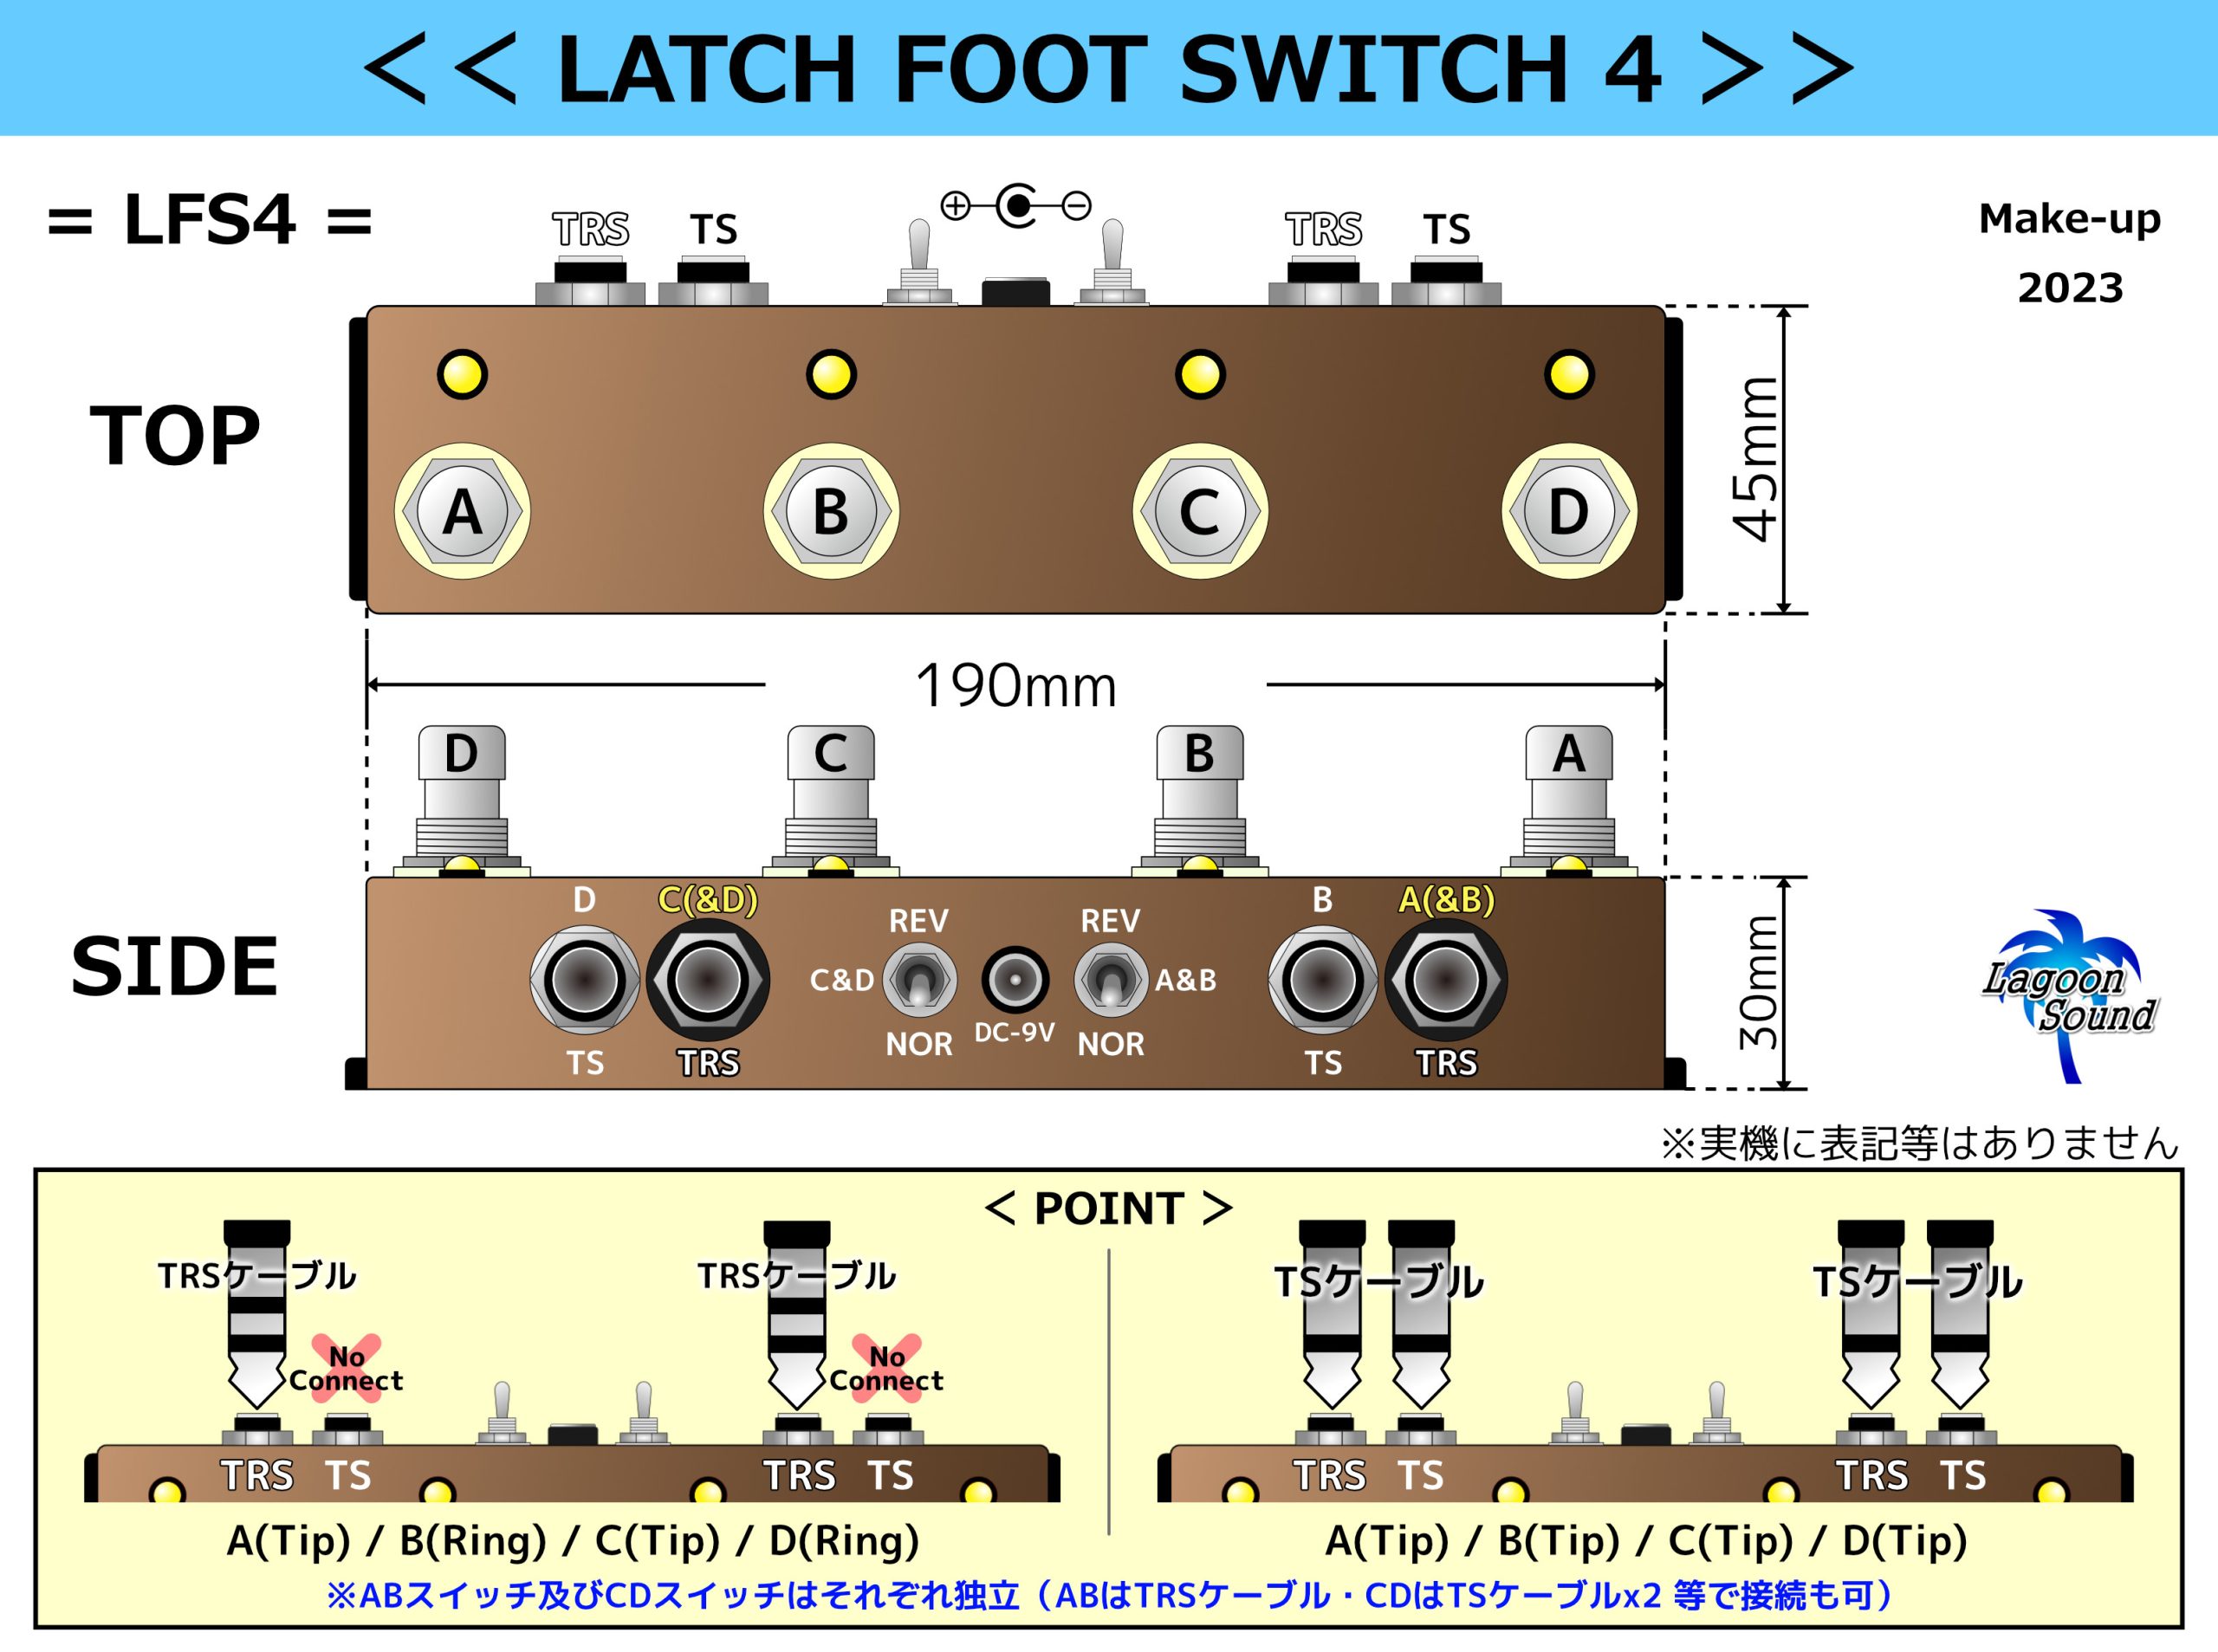 LATCH FOOT SWITCH 4 | LAGOON SOUND